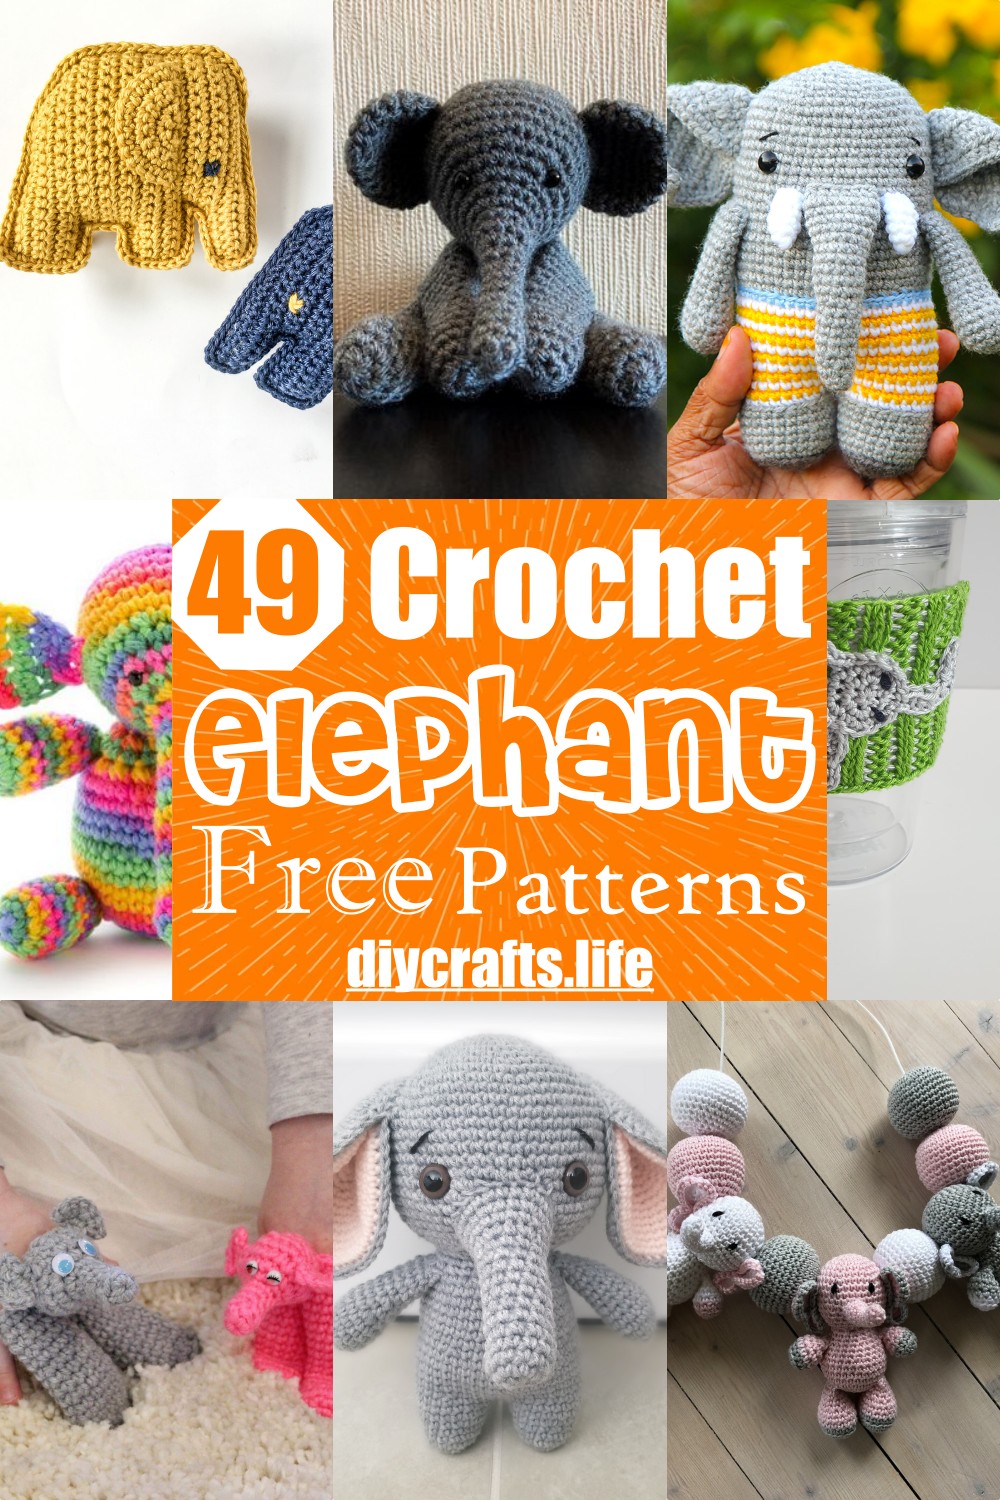 Free Crochet Elephant Patterns 2